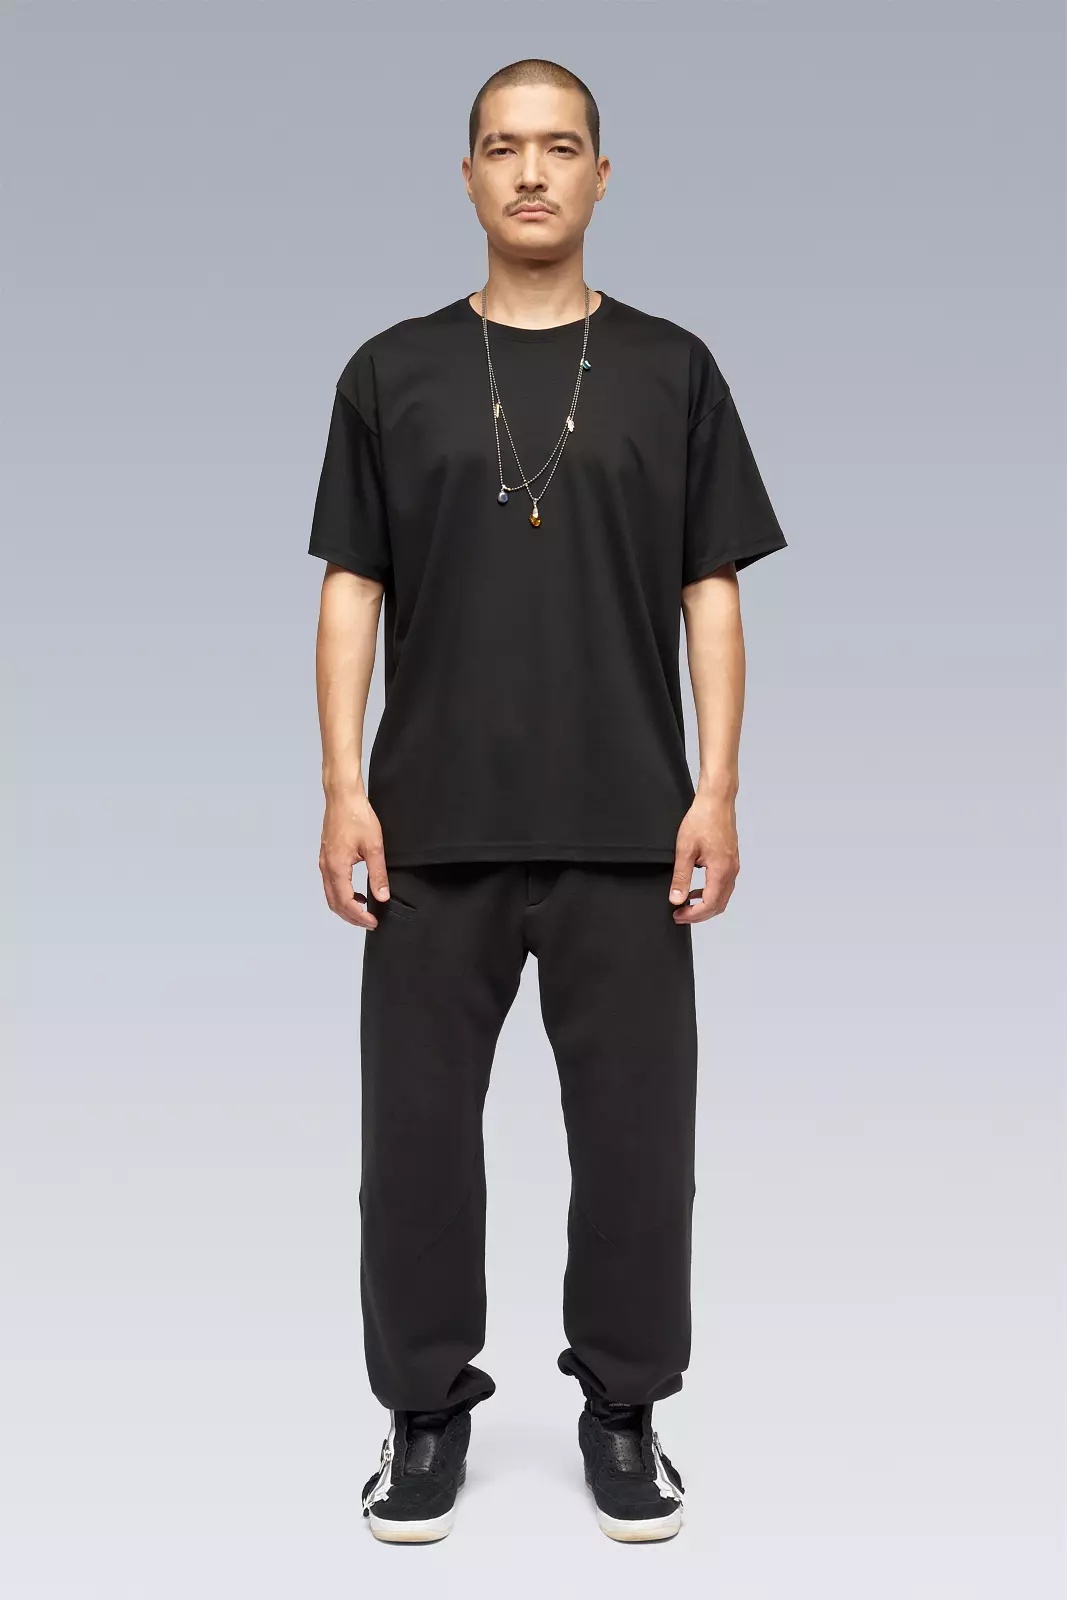 S24-PR-A 100% Cotton Mercerized Short Sleeve T-shirt Black - 1